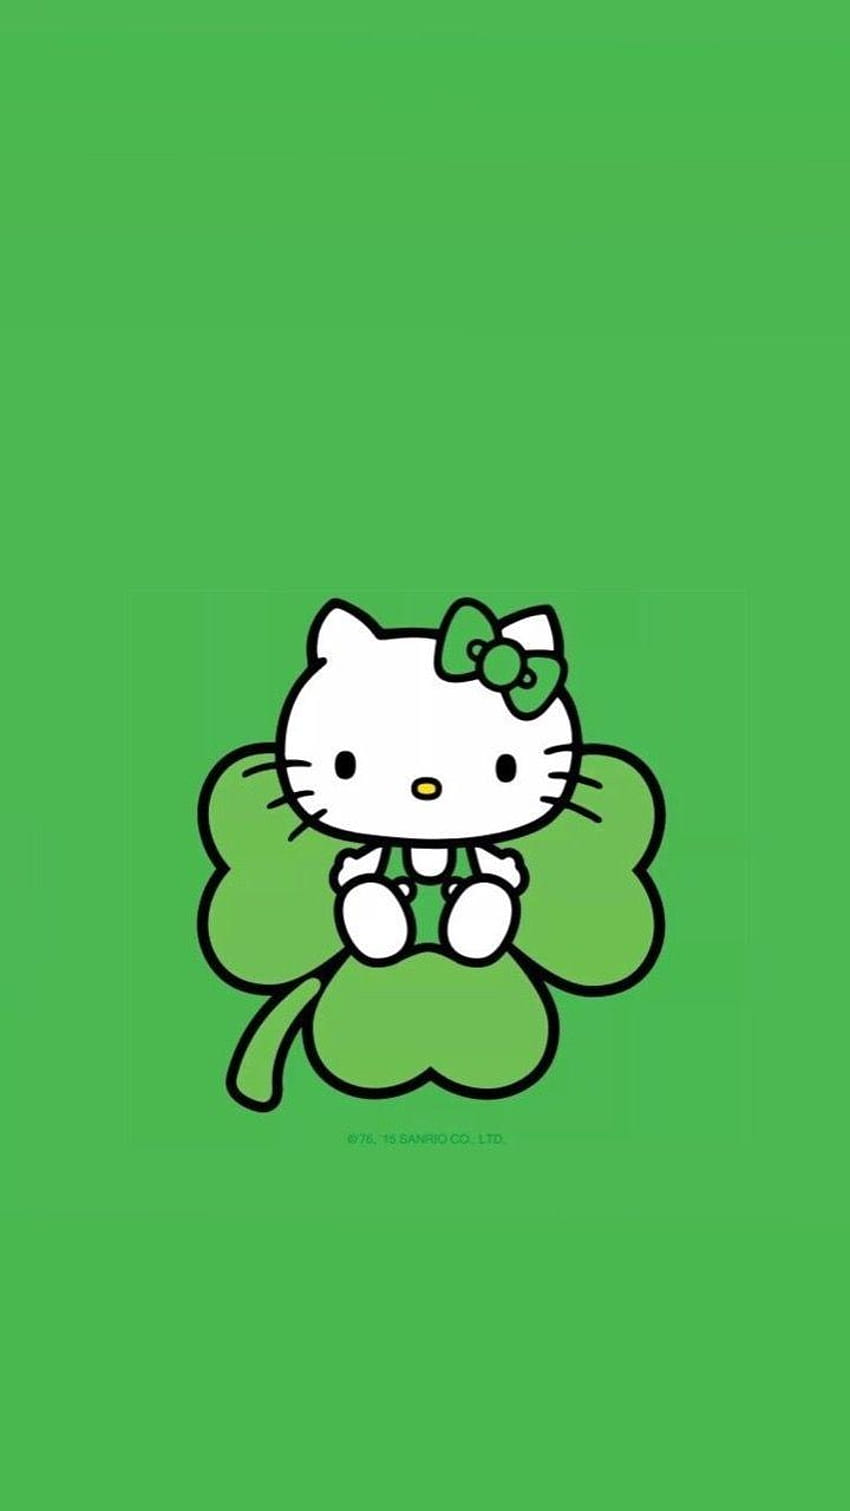 HELLO KITTY IPHONE WALLPAPER BACKGROUND  Sanrio hello kitty Hello kitty  wallpaper Hello kitty images